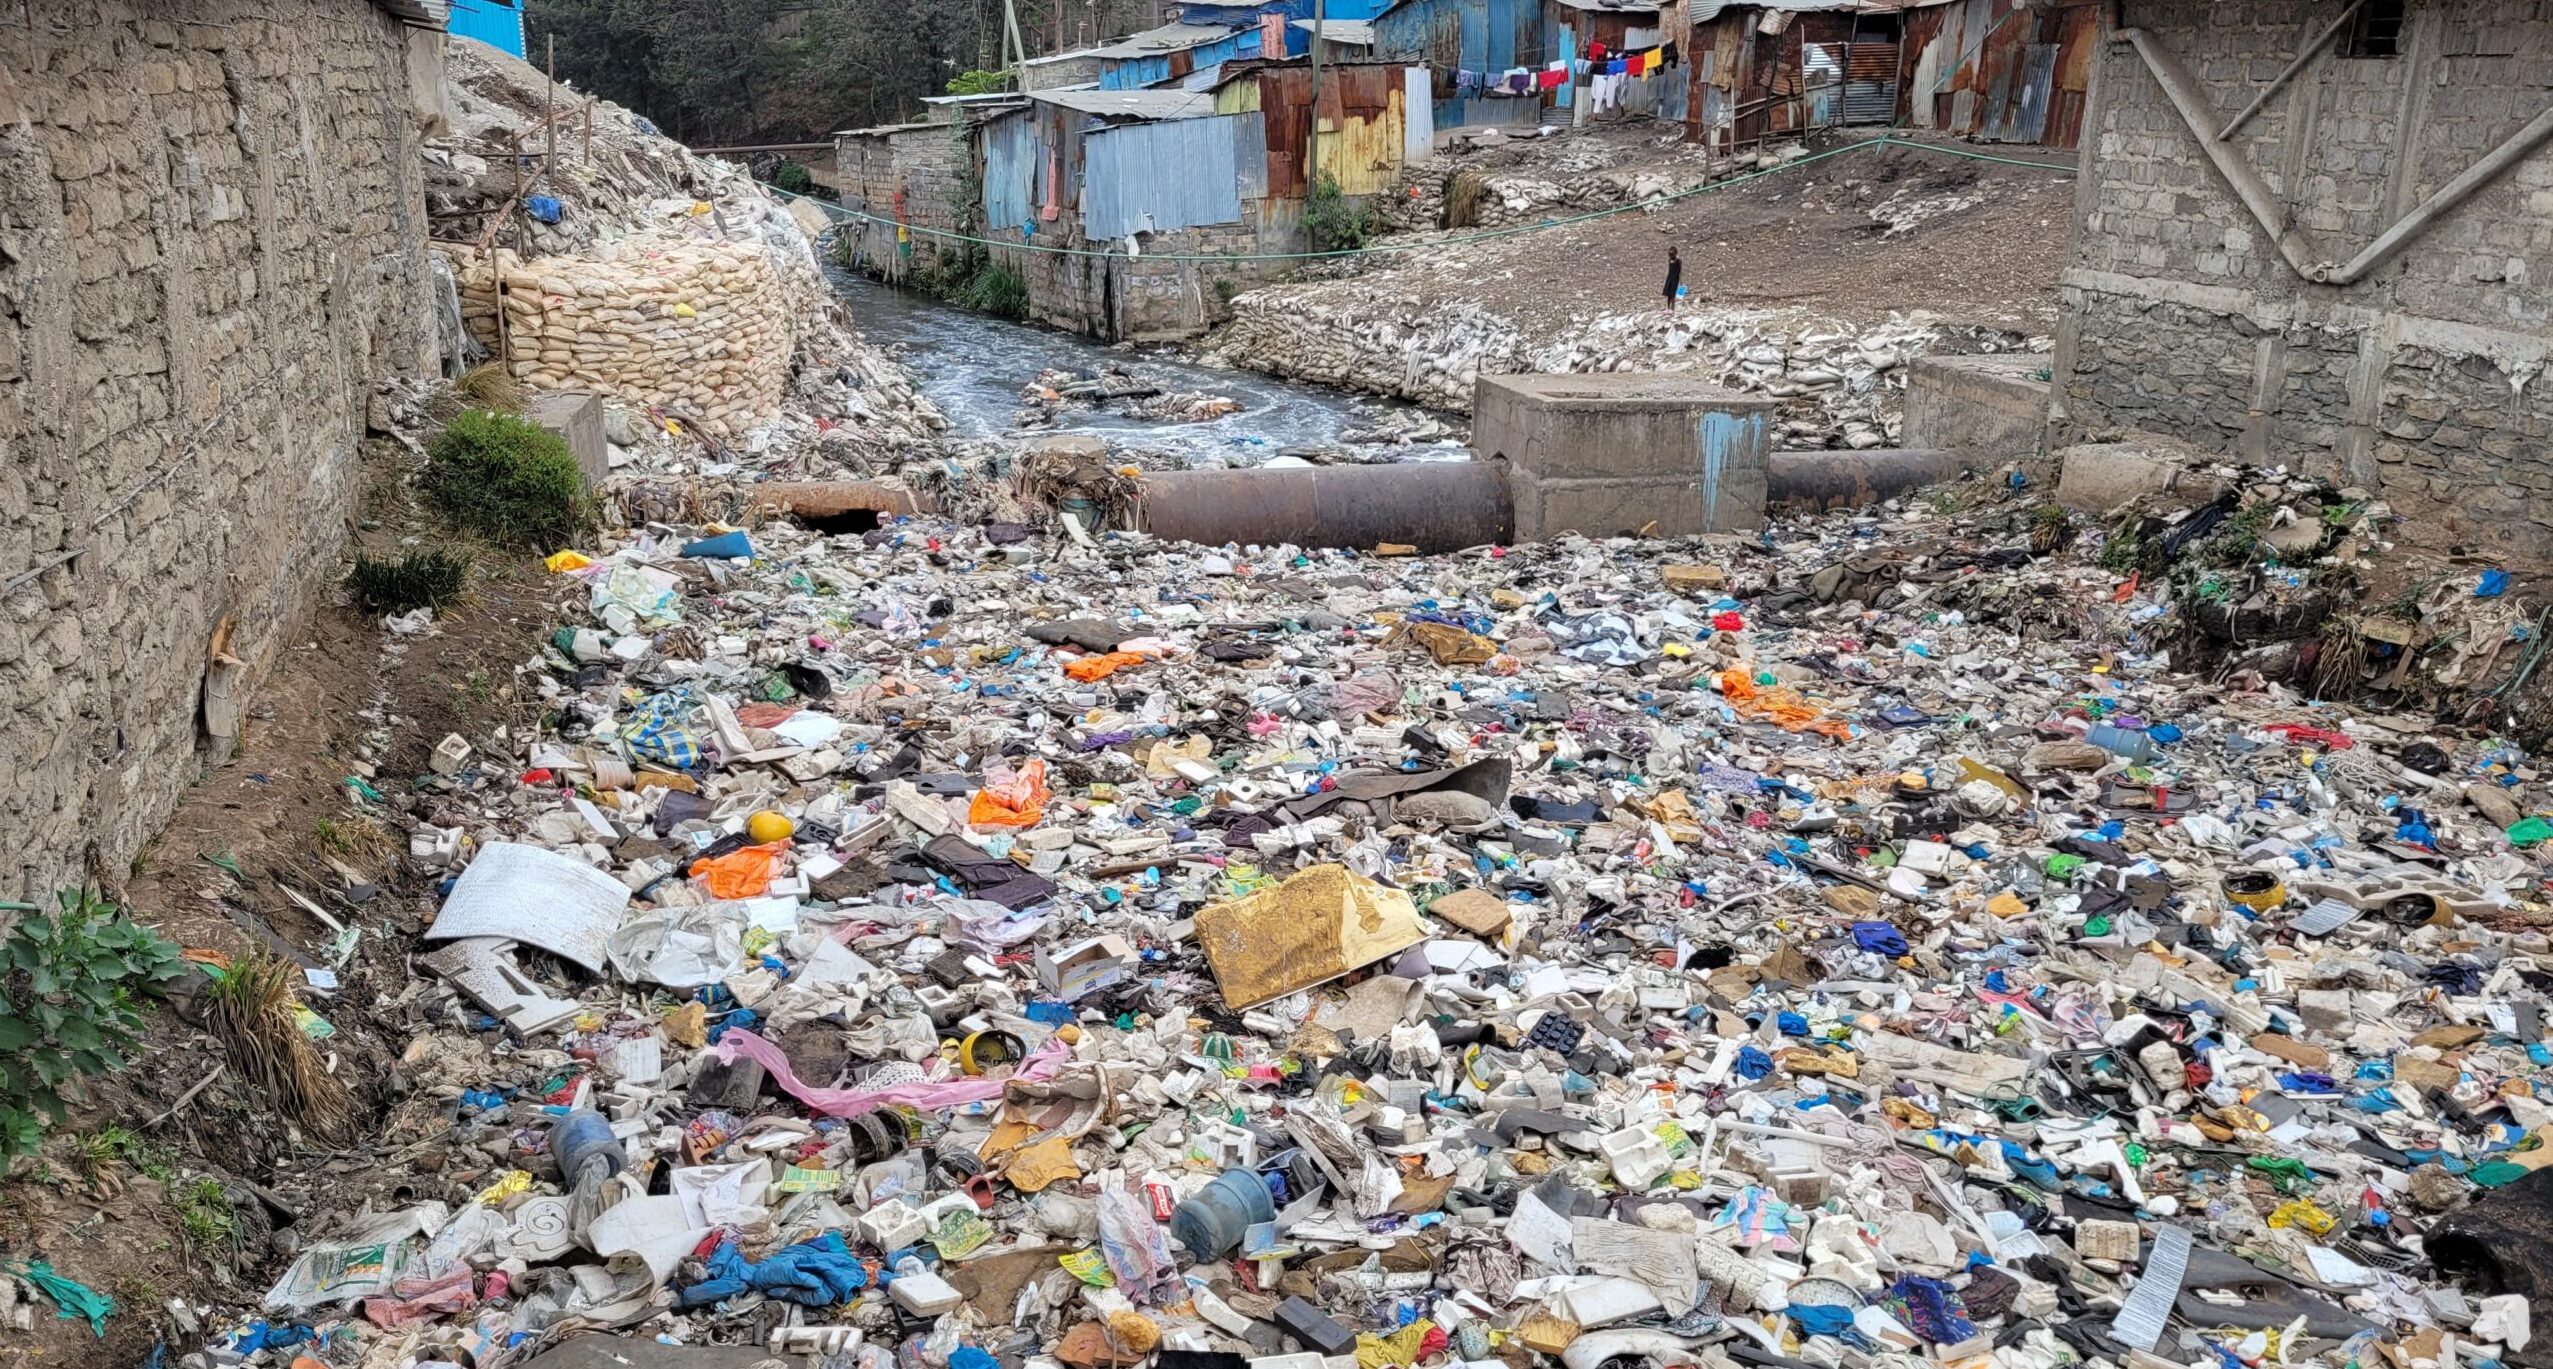 Trash dumping site in Kenya